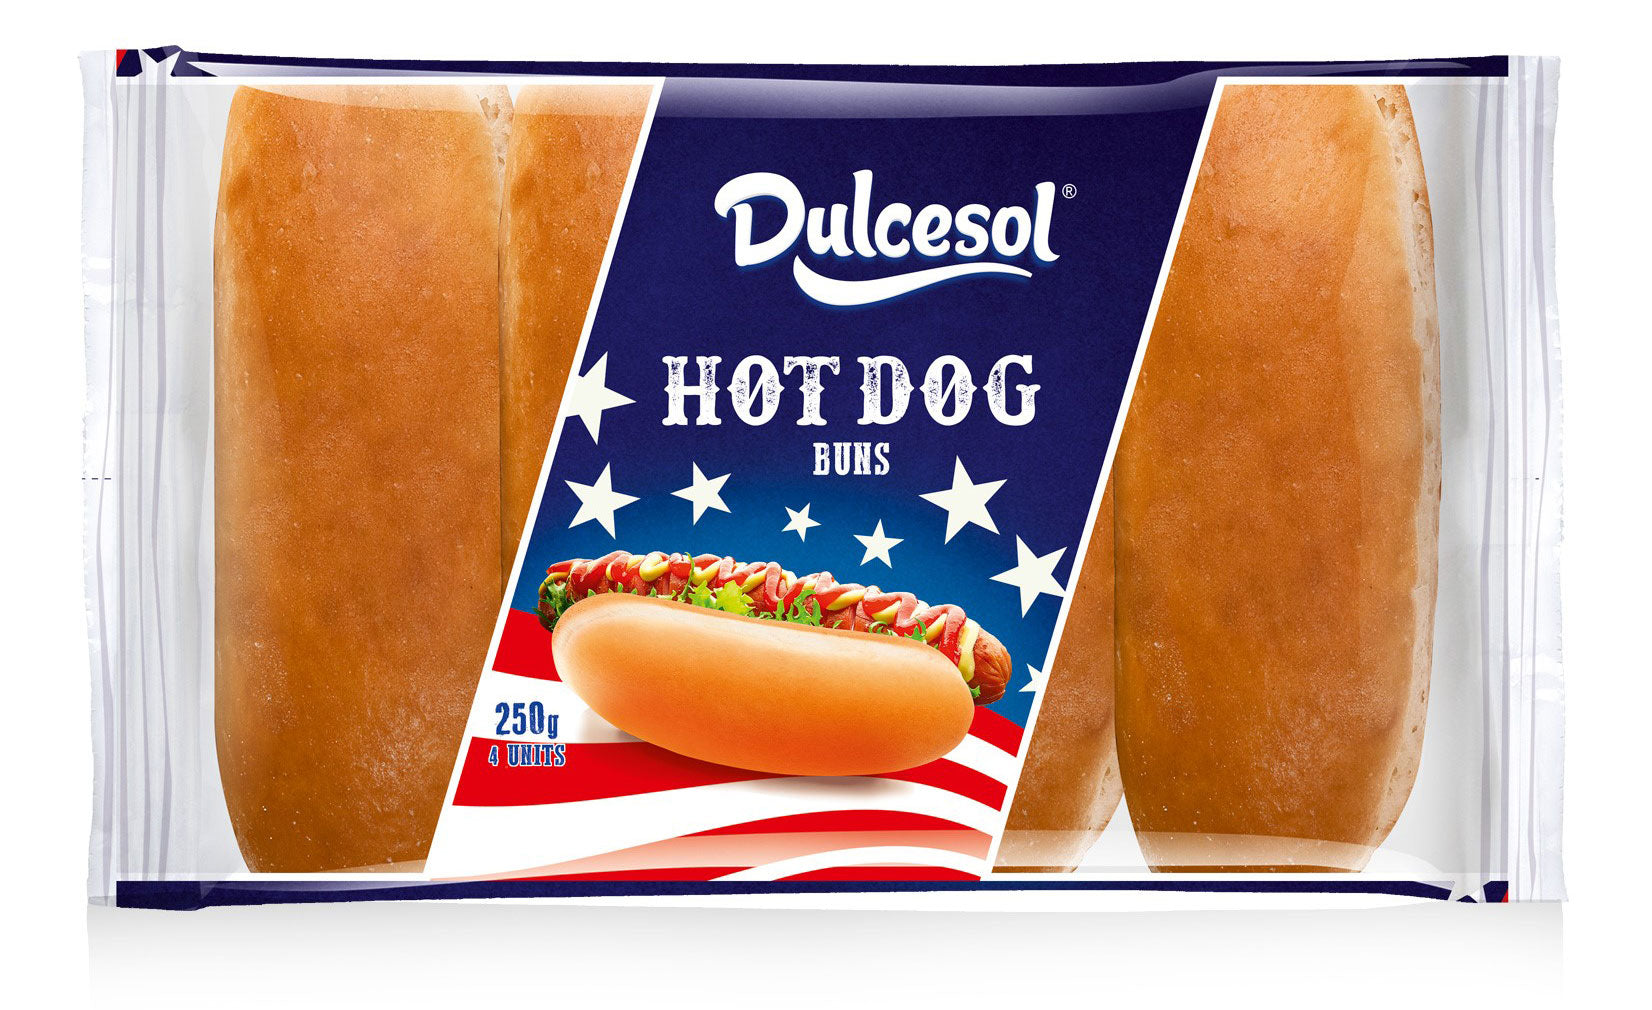 8-x-Dulcesol-Hot-Dog-Buns-4-Pack-250Gm